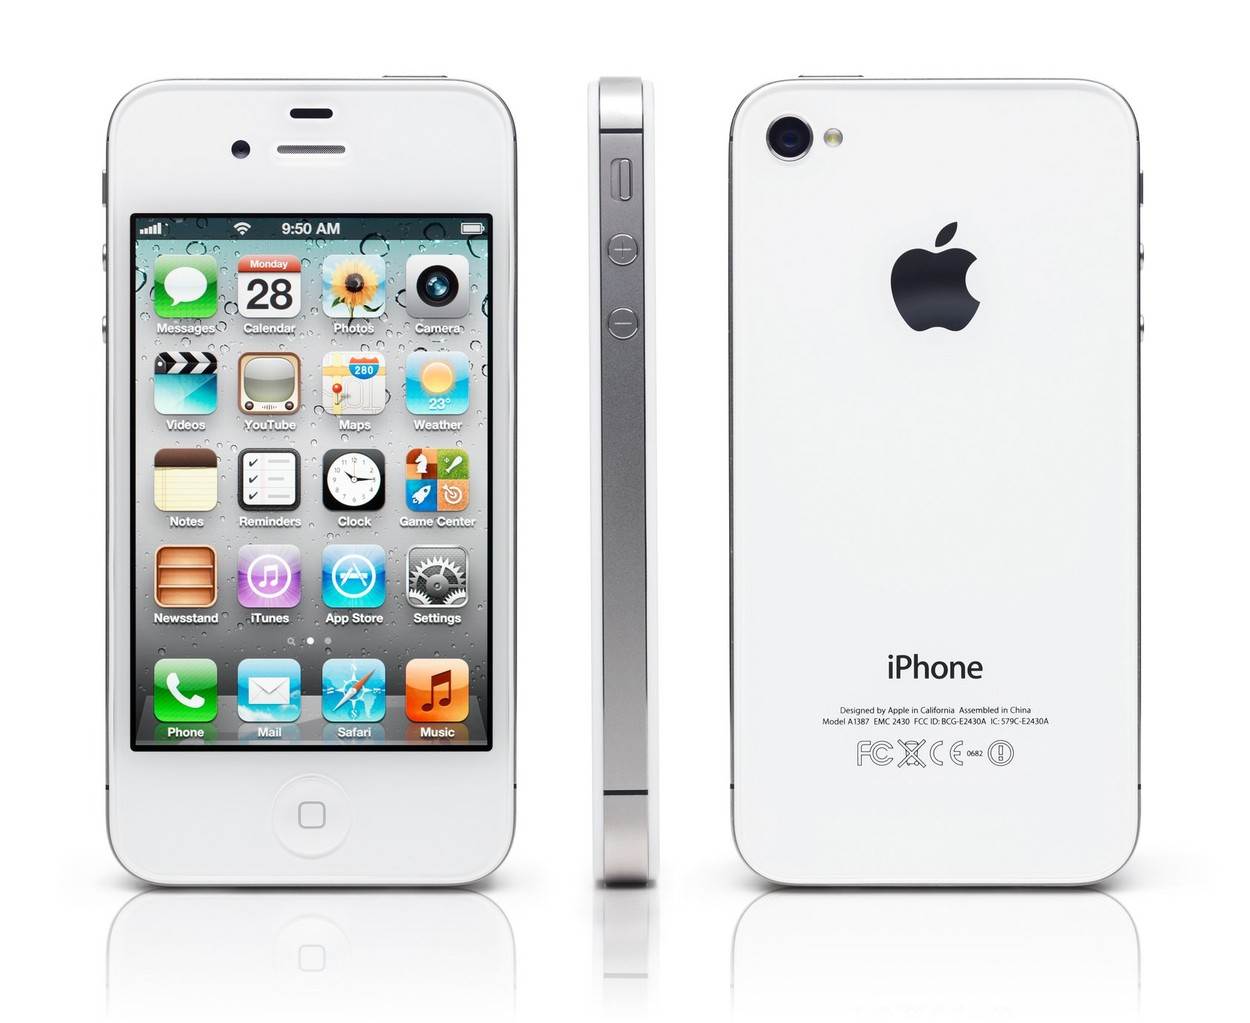  Apple iPhone 4s.jpg 